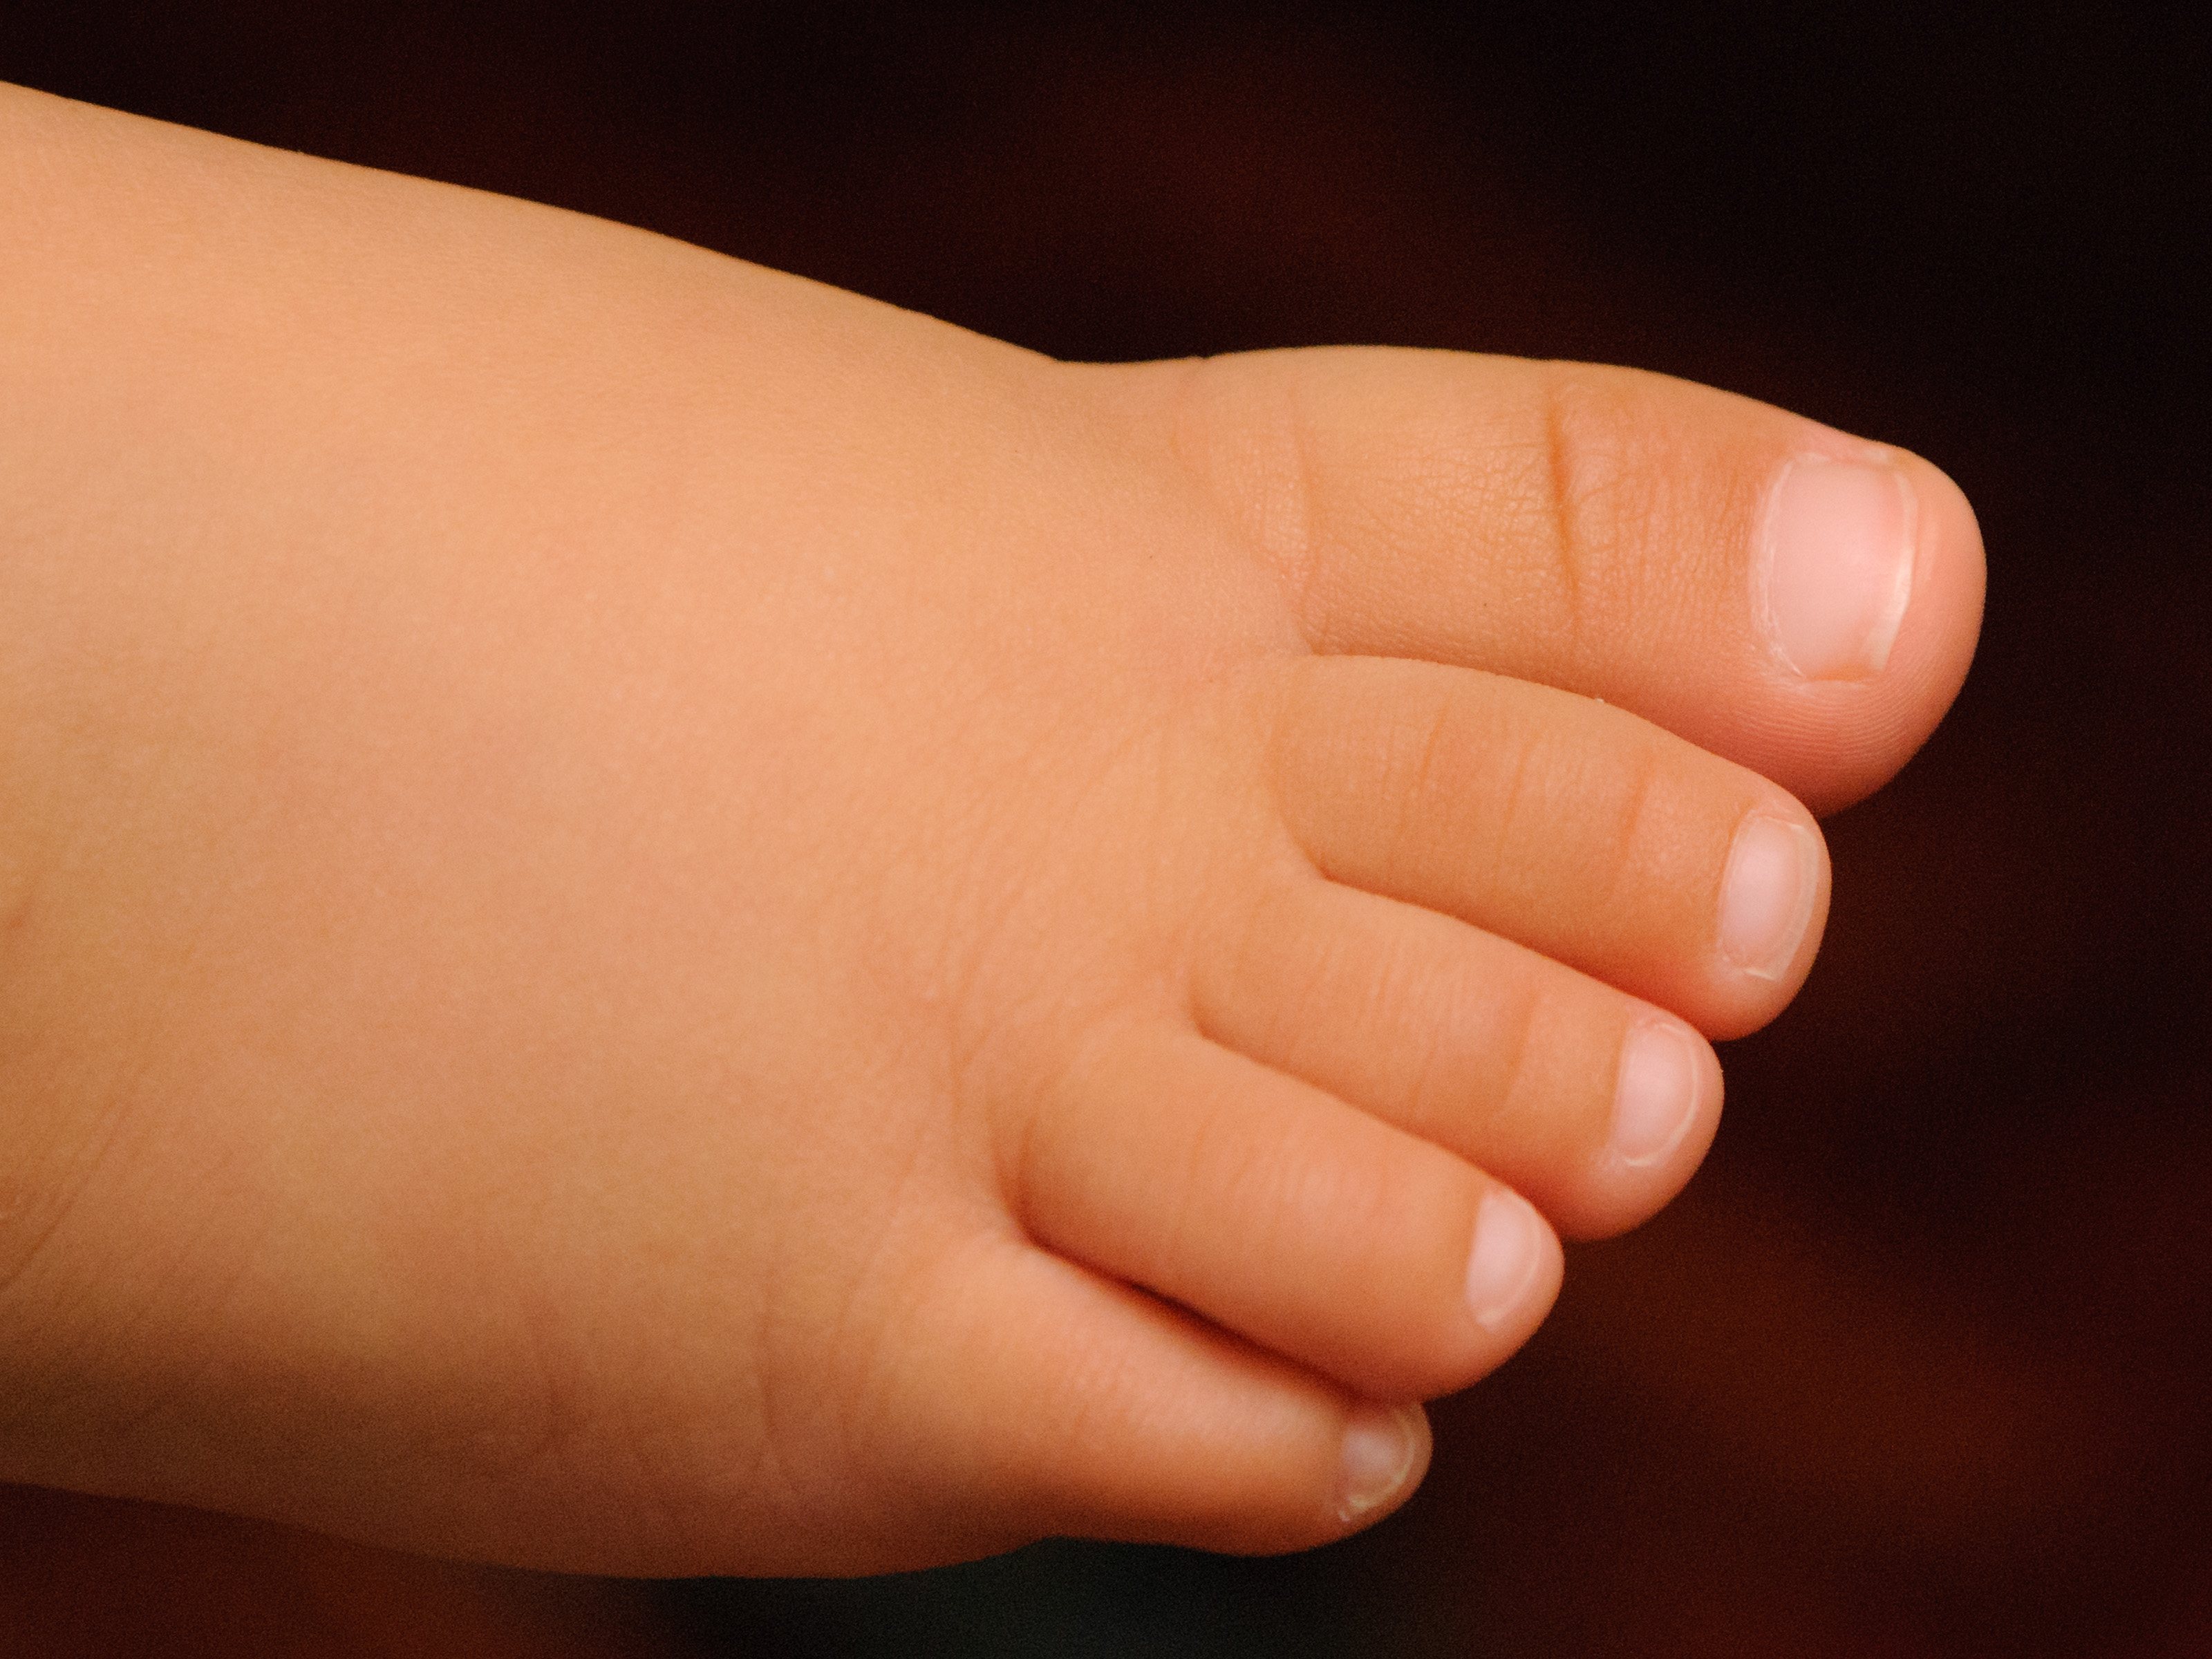 Дети фут. Детский foot feet Nails. Девочка Toes. 3 В foot Nail Polish. Toes картинка для детей.